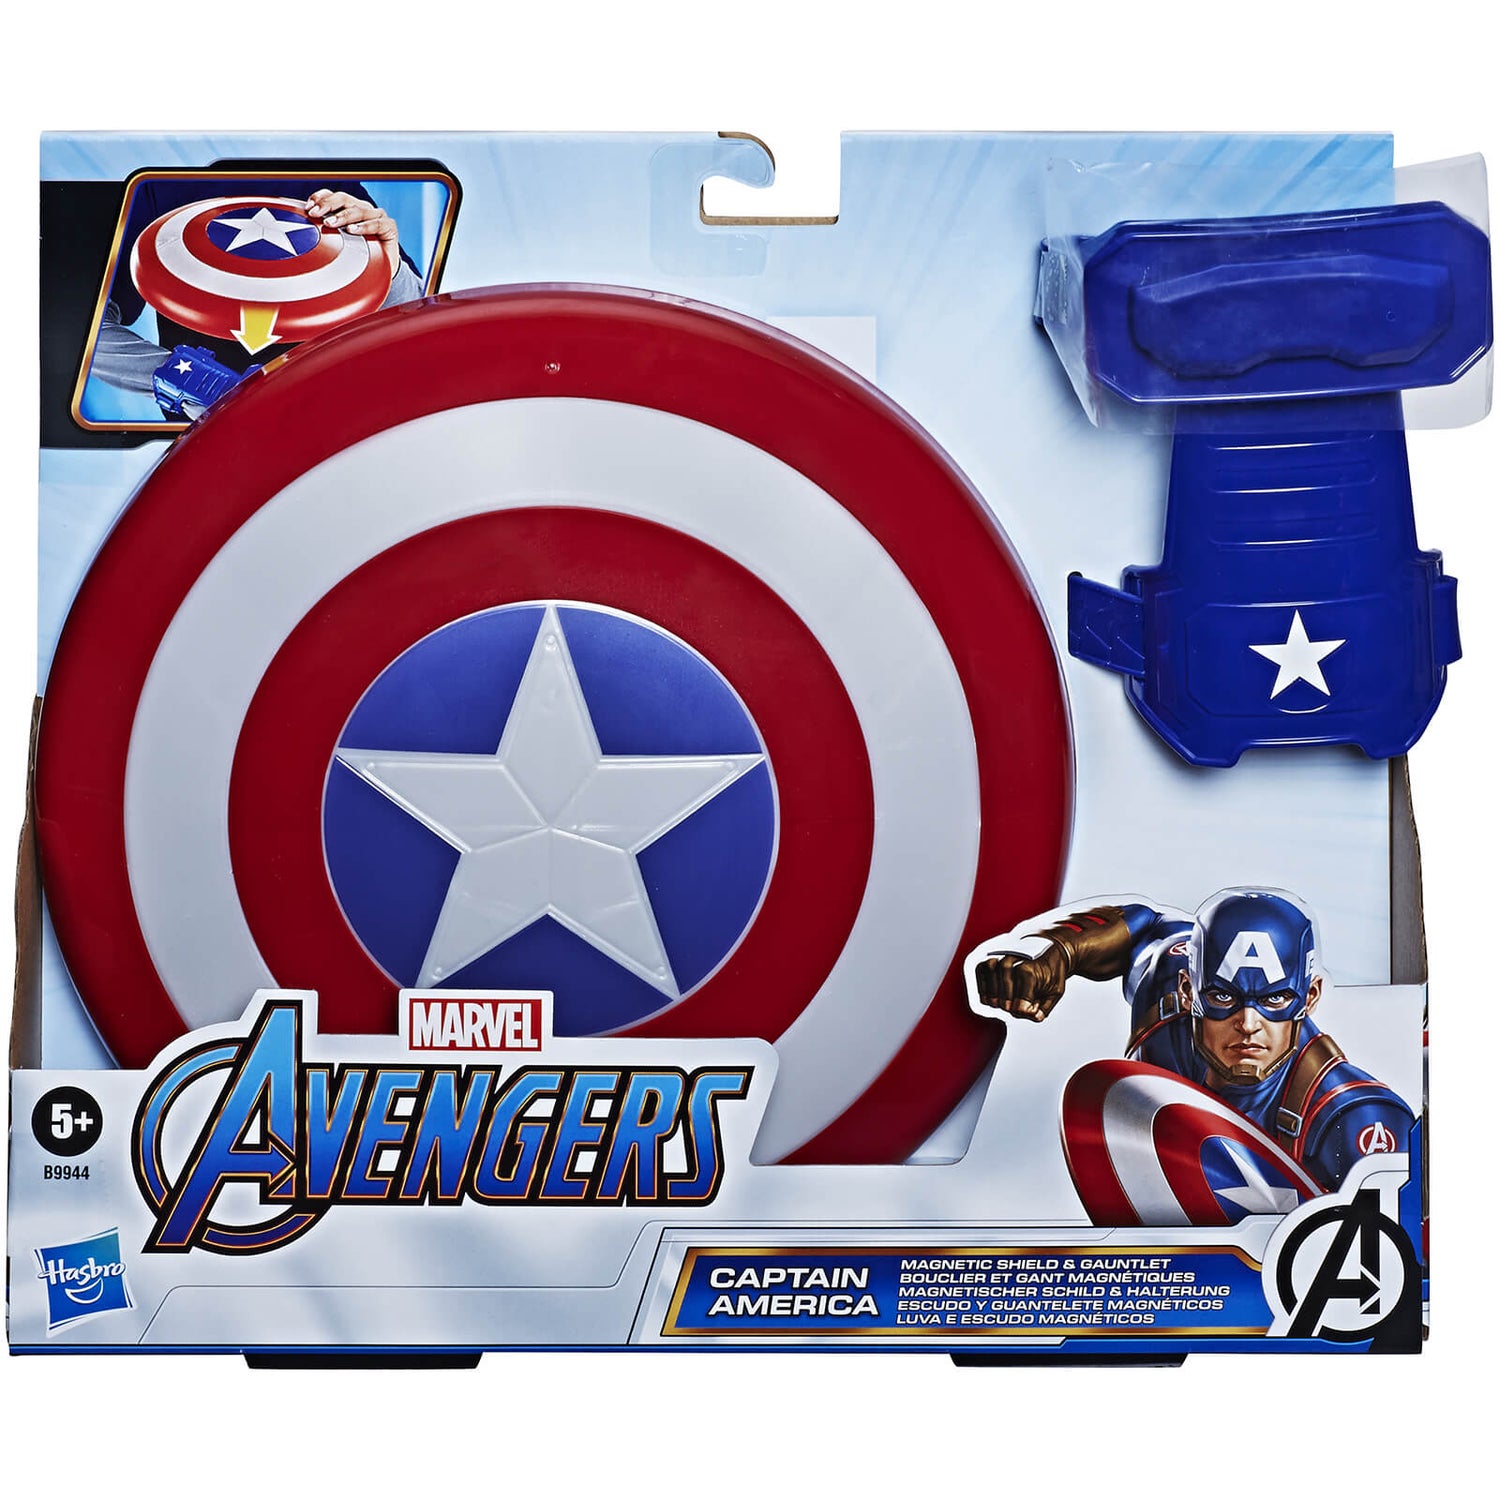 Hasbro Marvel Avengers - Captain America Magnetischer Schild und Fehdehandschuh